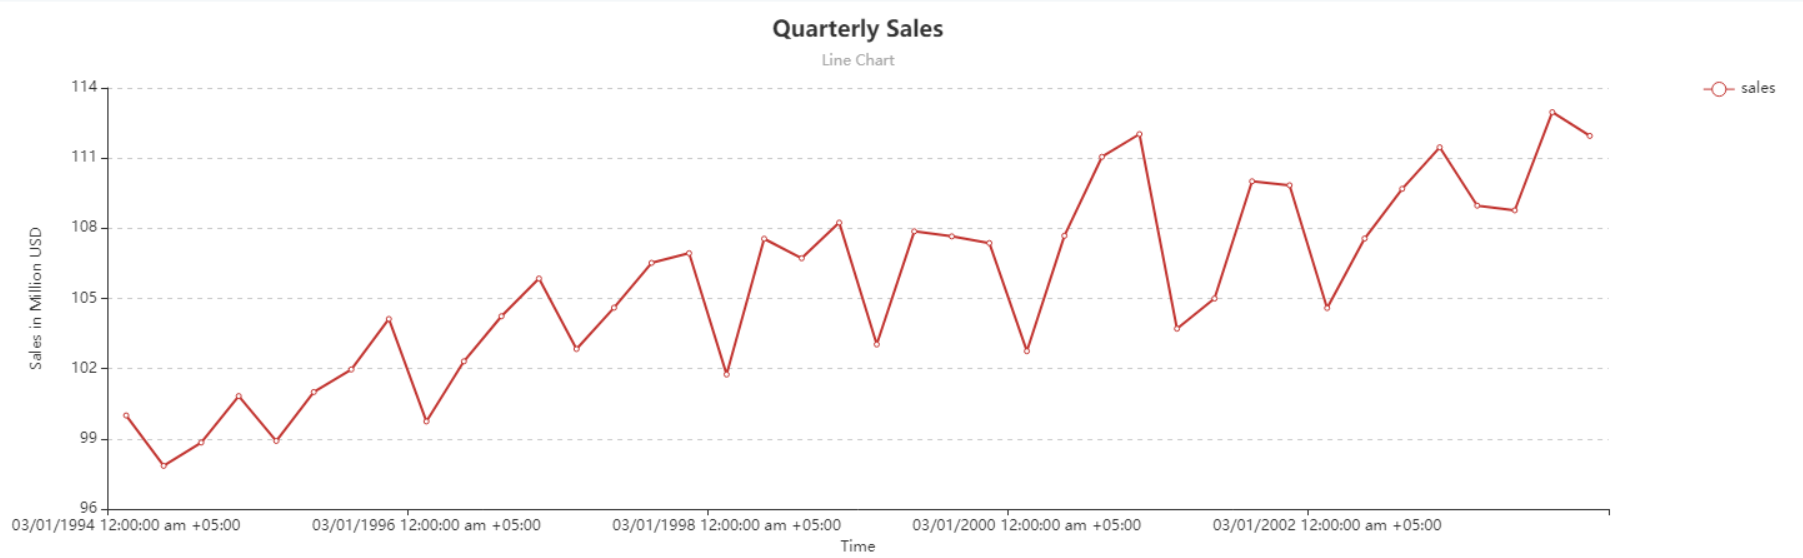 05-quarterly-sales